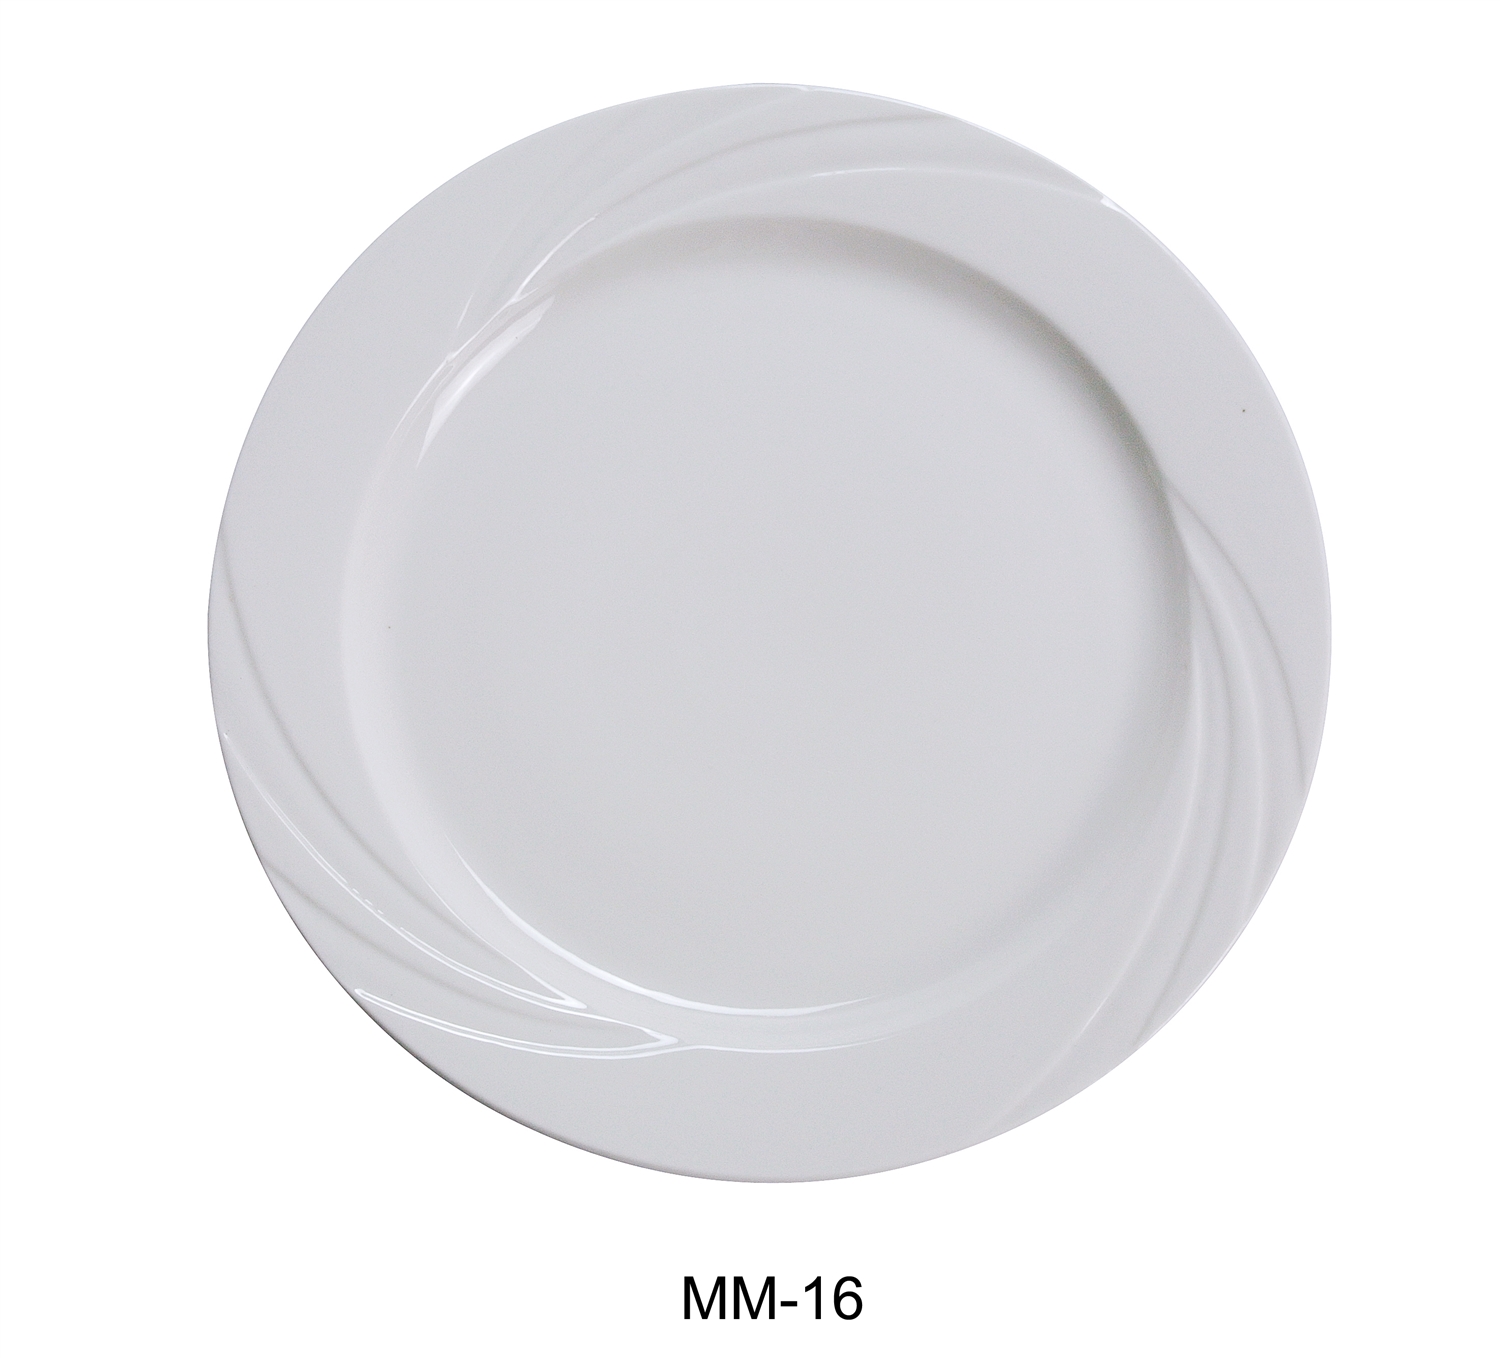 Yanco MM-16 Miami-1 10.5" Dinner Plate - by Celebrate Festival Inc